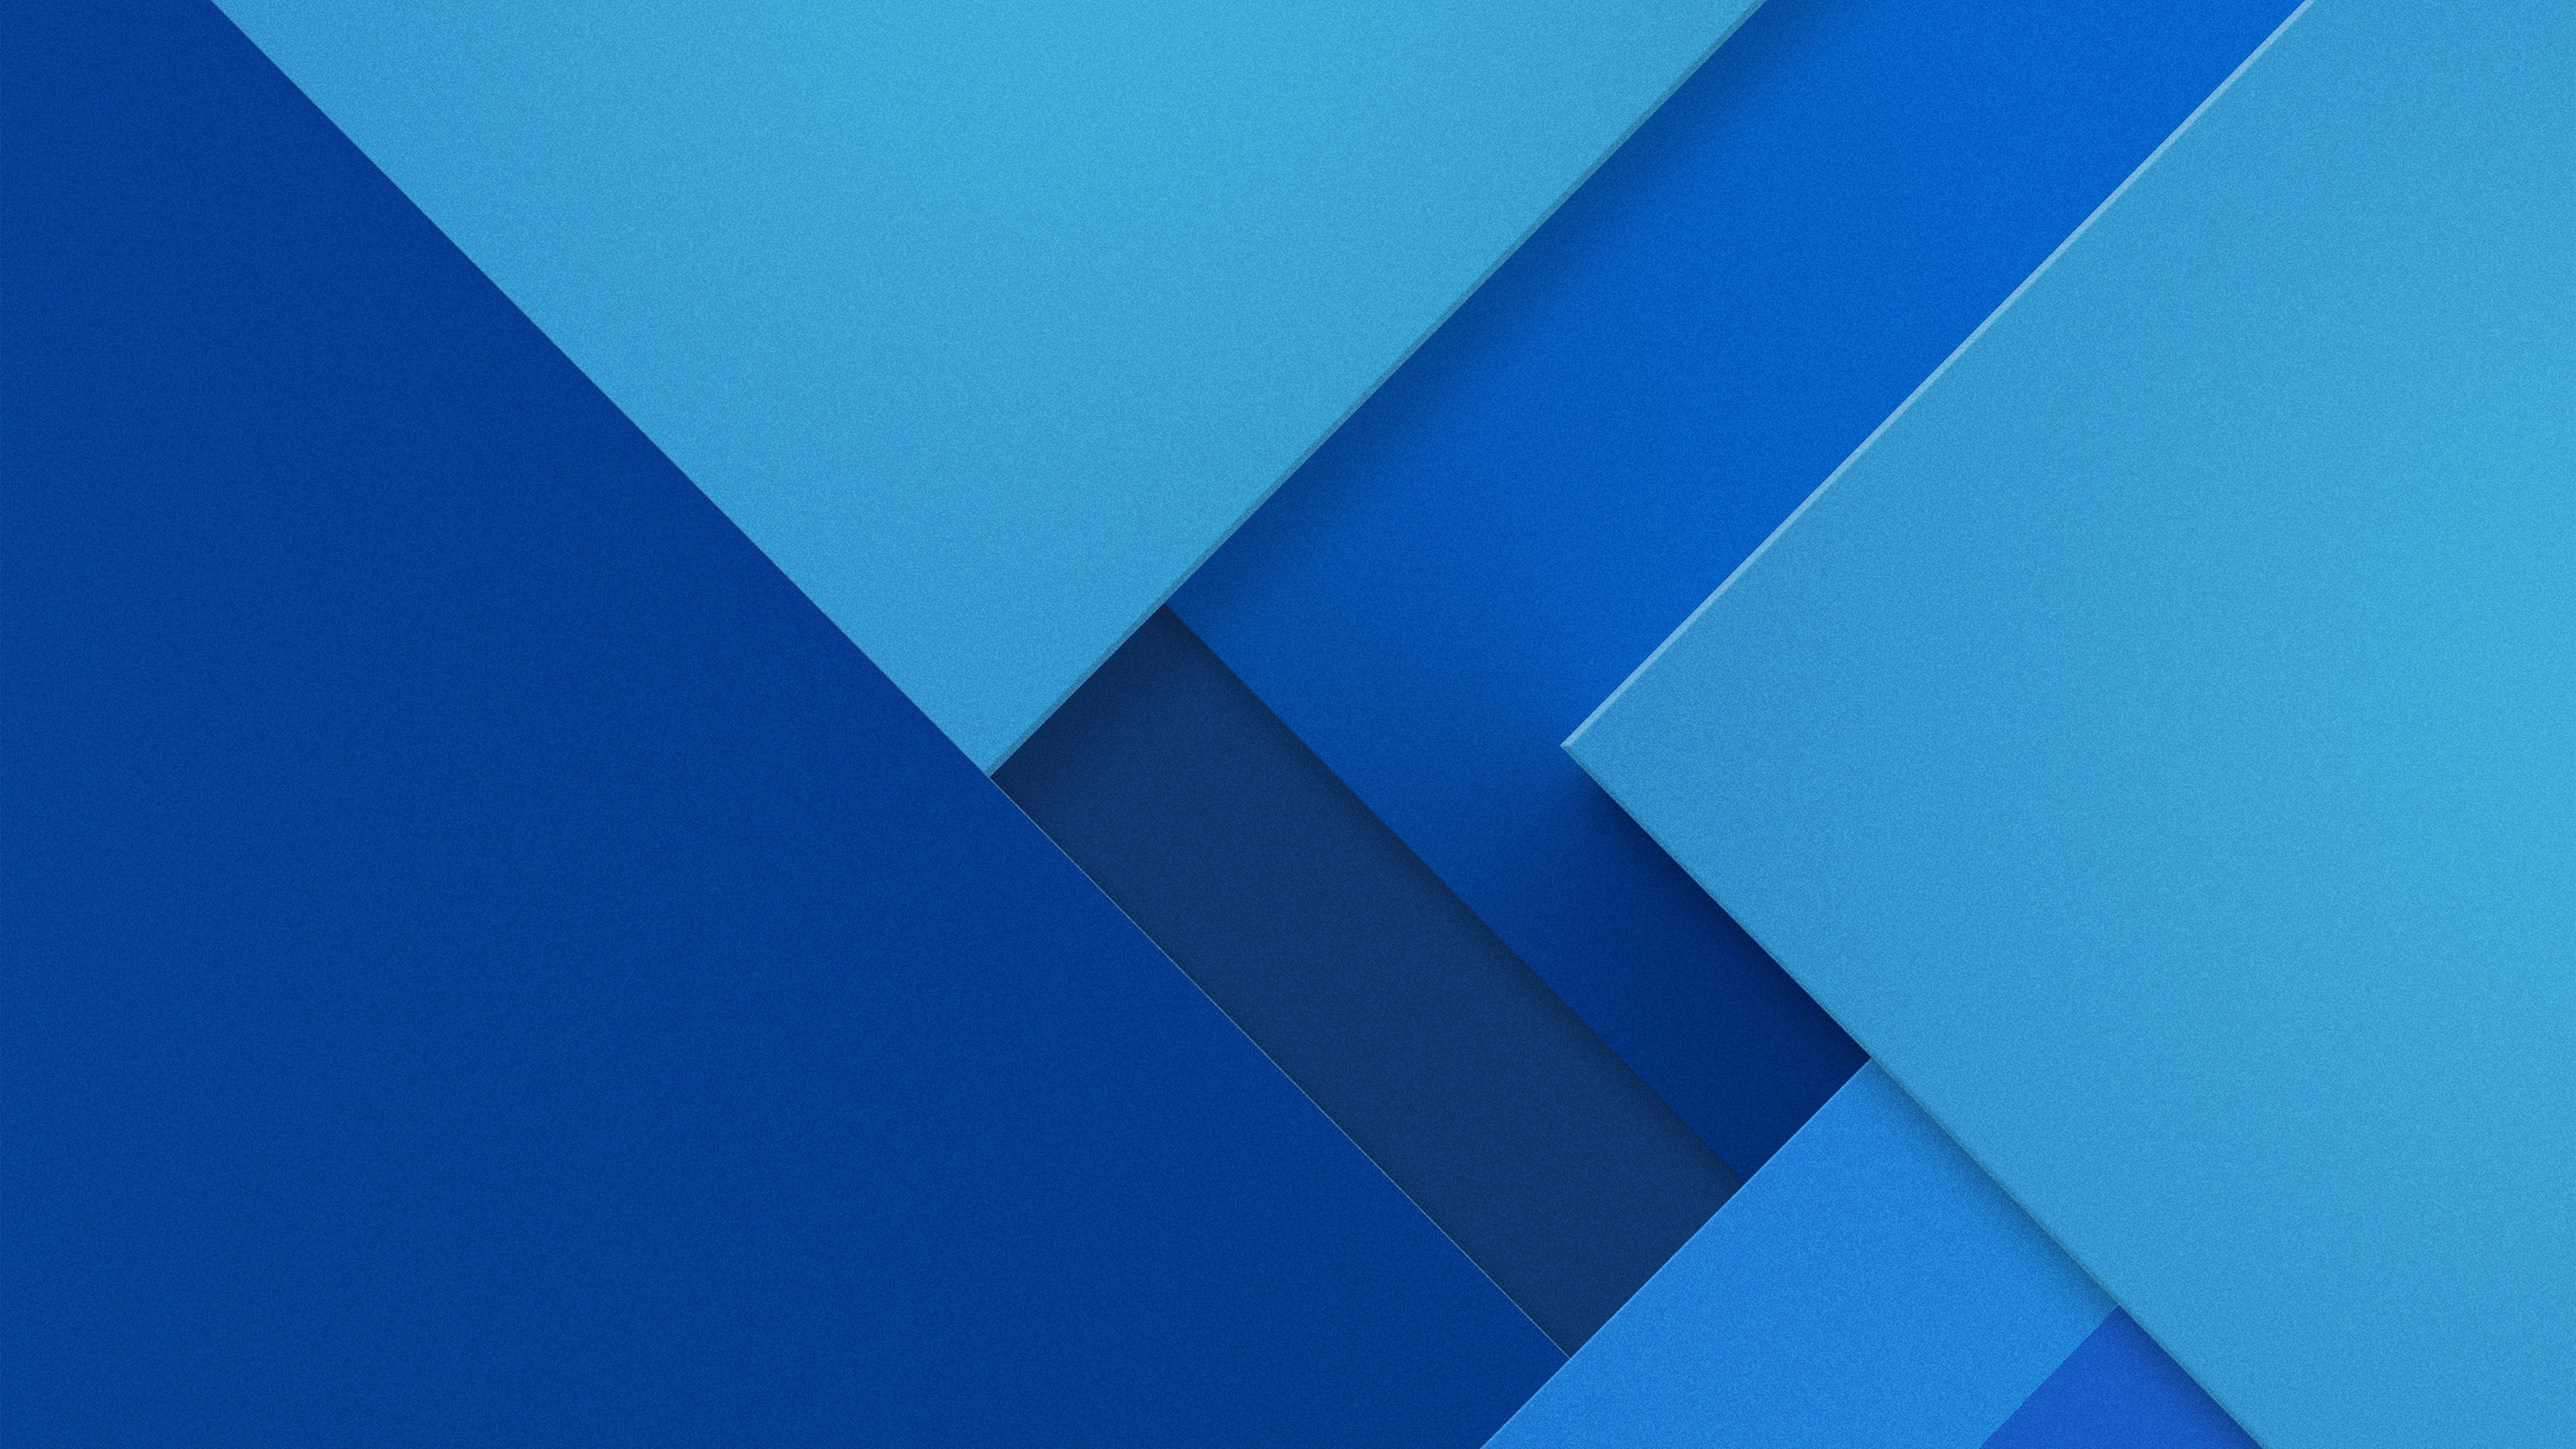 wallpaper for desktop, laptop. samsung galaxy 7 edge blue abstract pattern